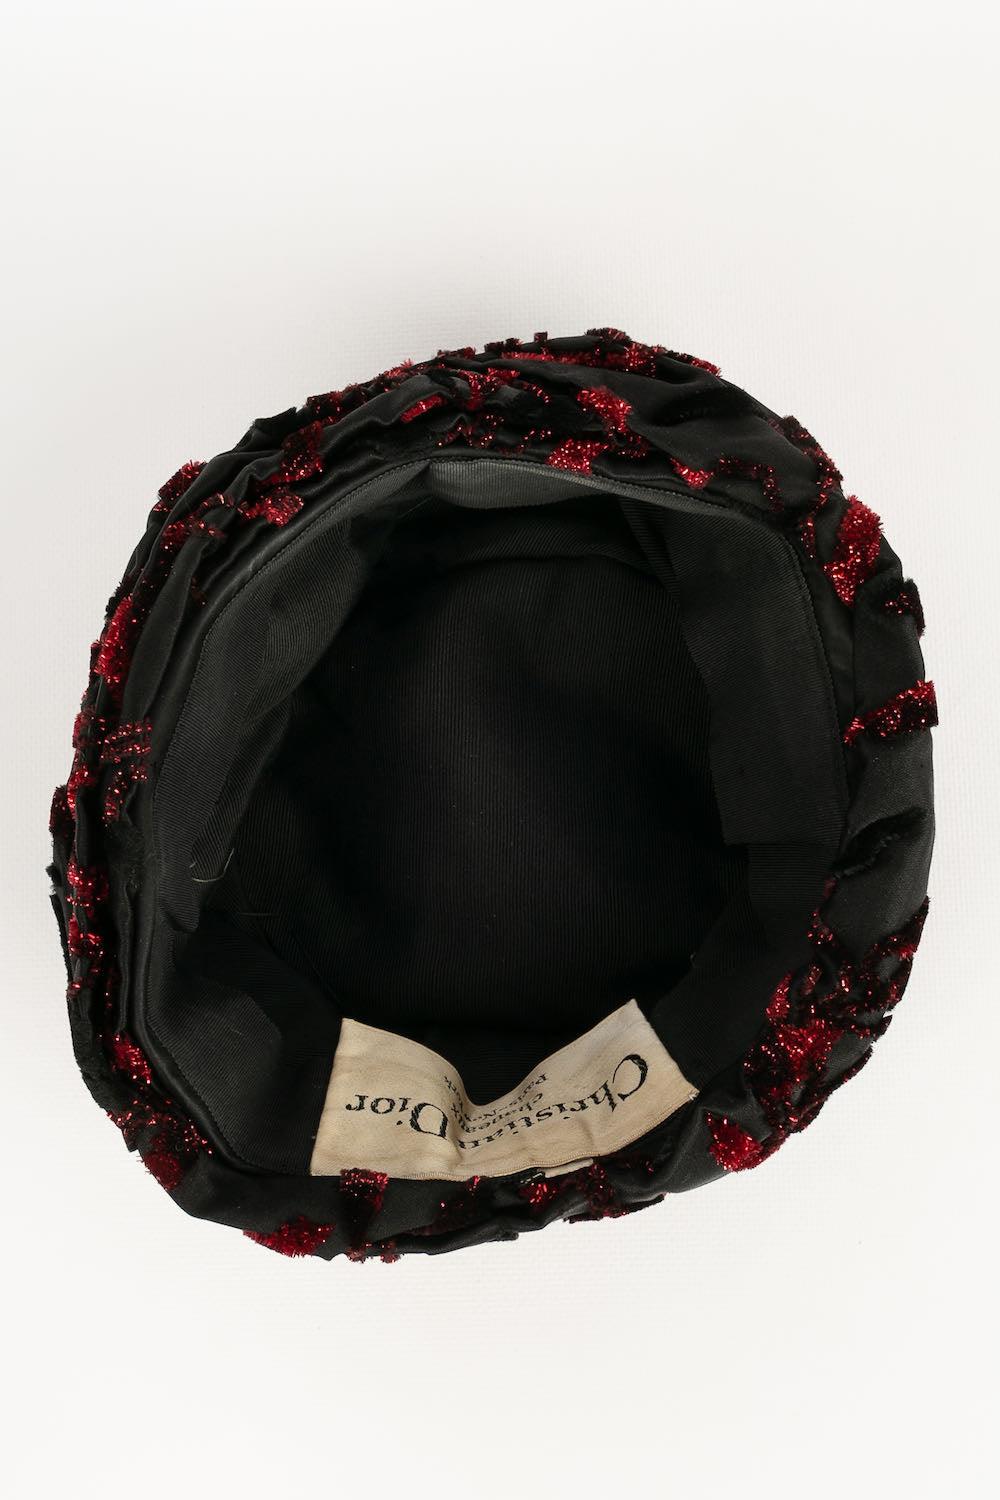 Dior Black Silk and Red Velvet Hat 2